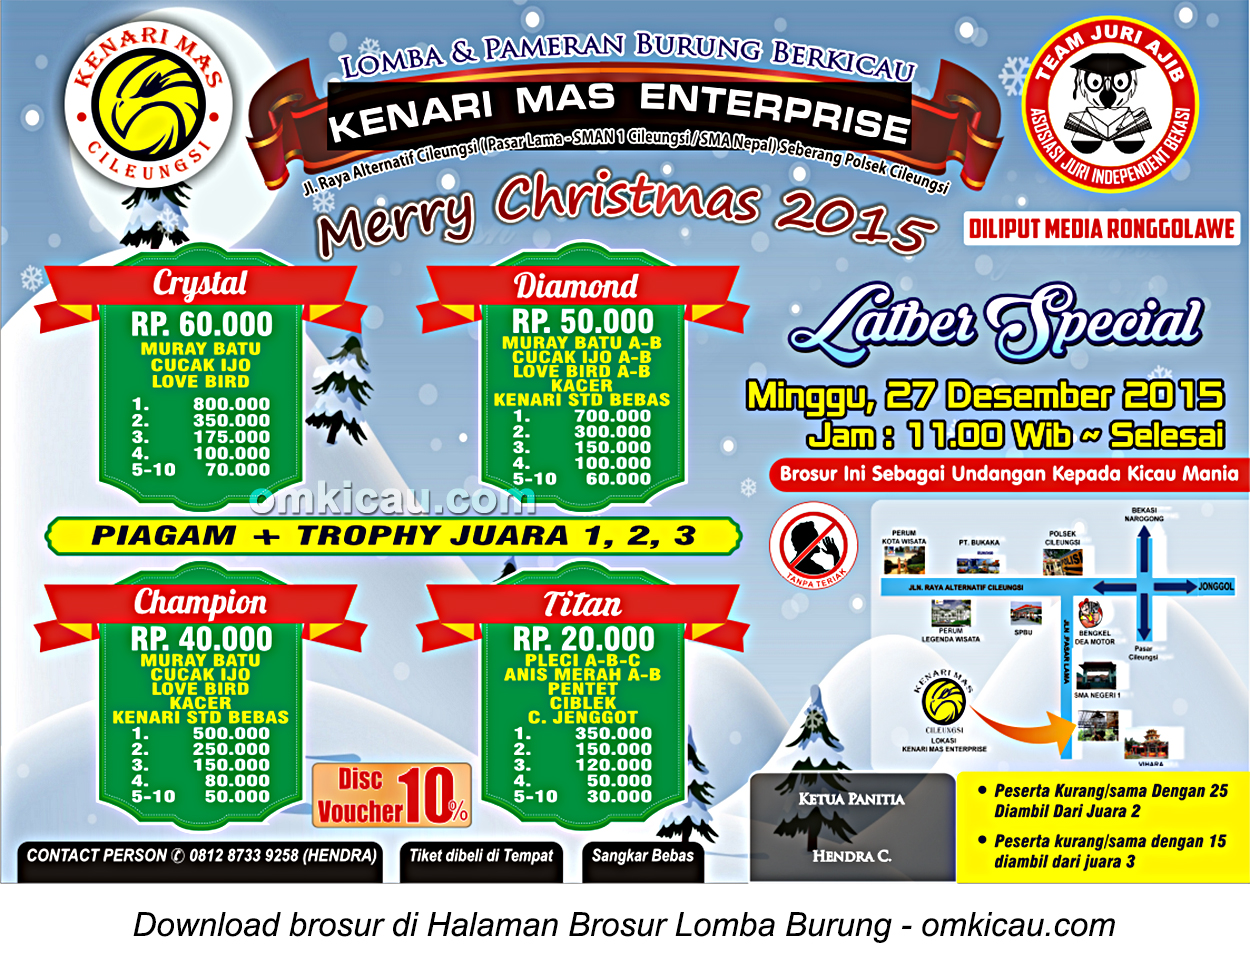 Brosur Latber Spesial Merry Christmas - Kenari Mas Enterprise, Bogor, 27 Desember 2015